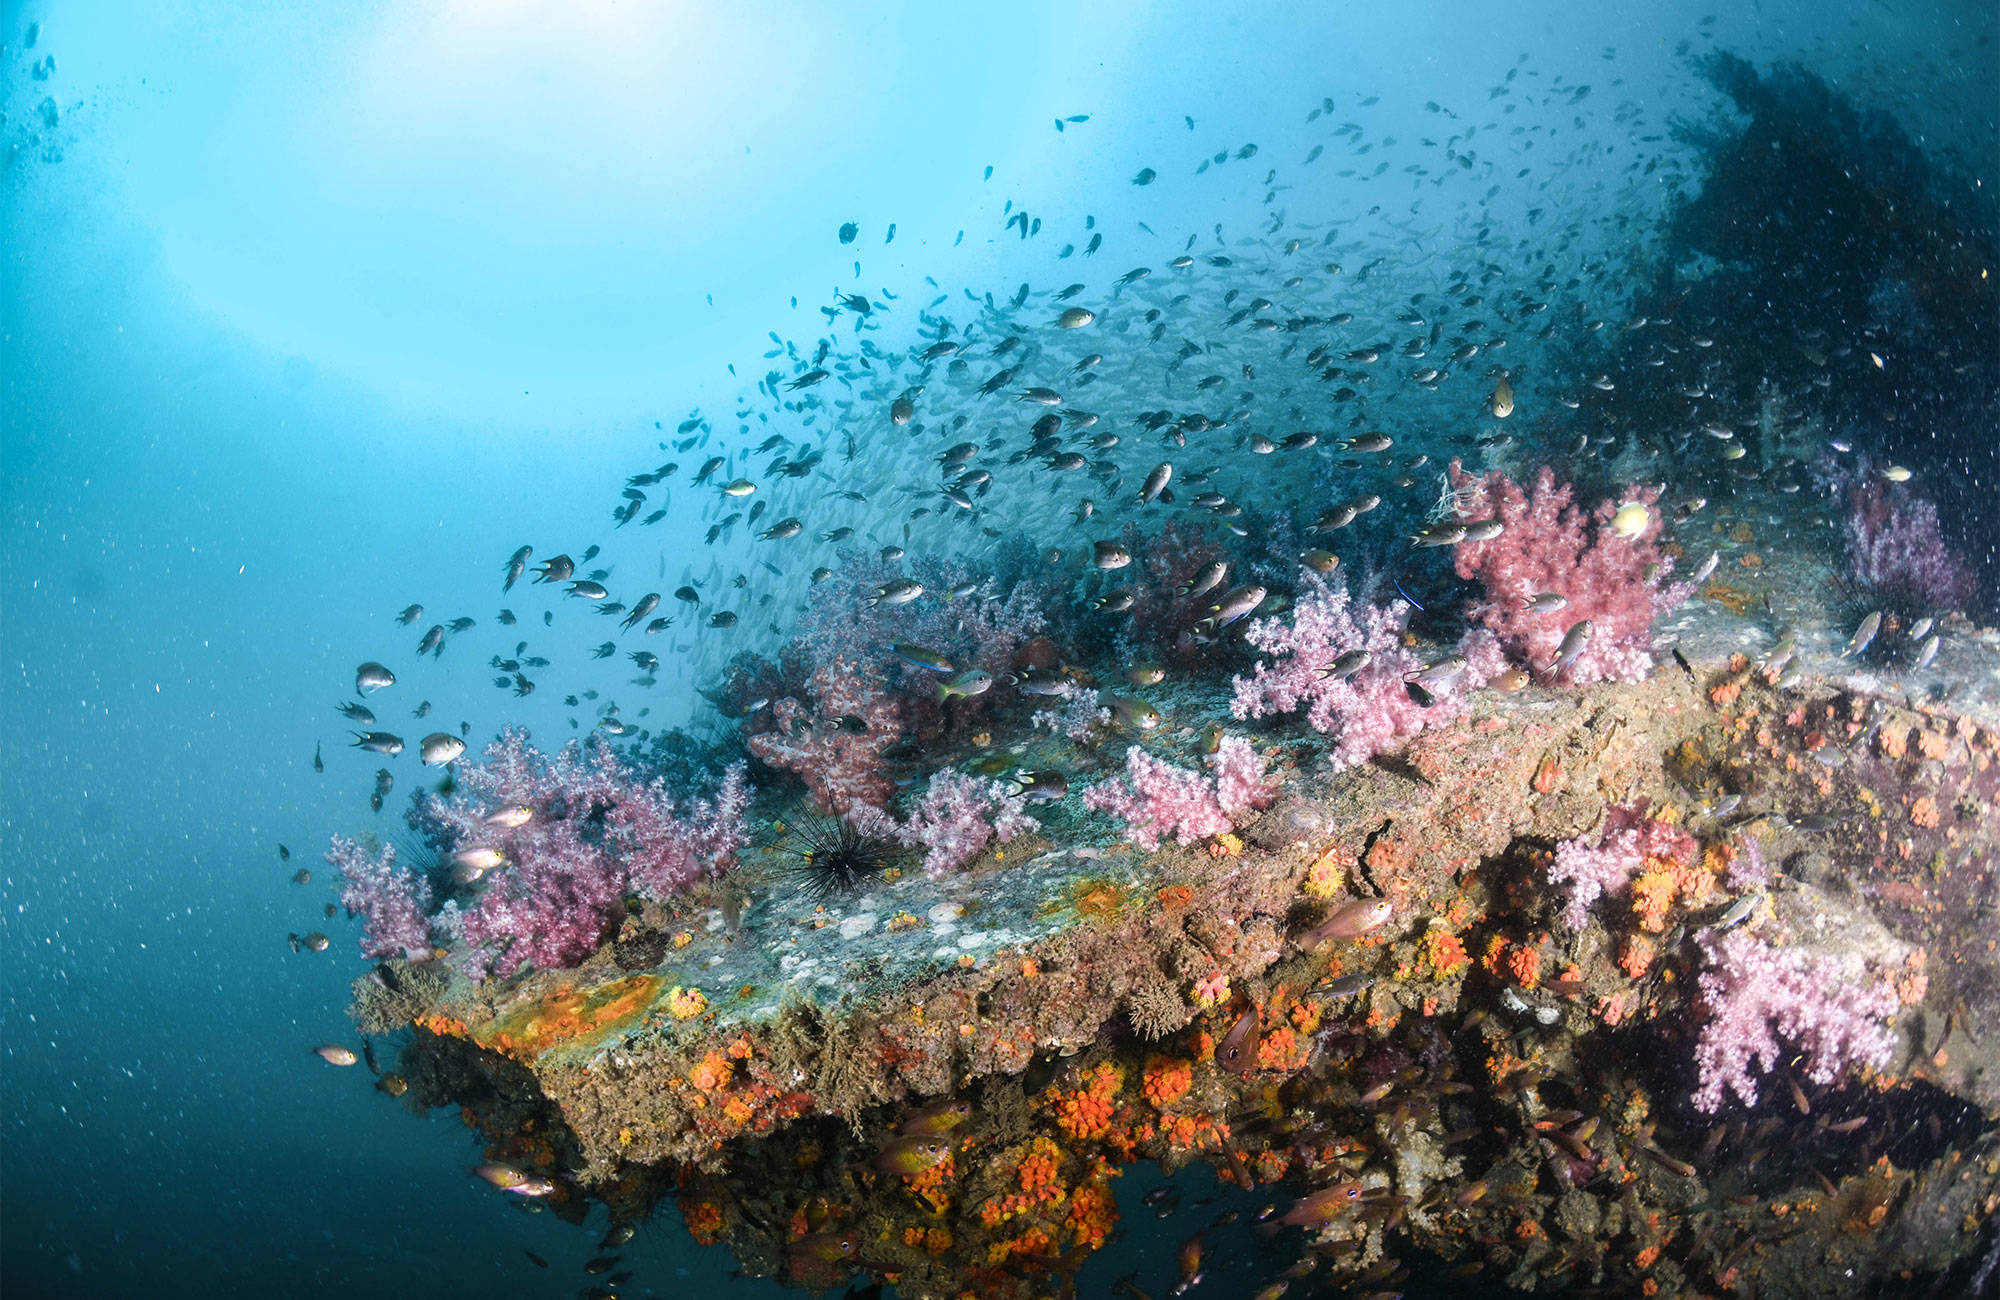 Vissen en koraal onderwater in Thailand | Beste reistijd augustus | Beste bestemmingen augustus | Reiskalender | KILROY